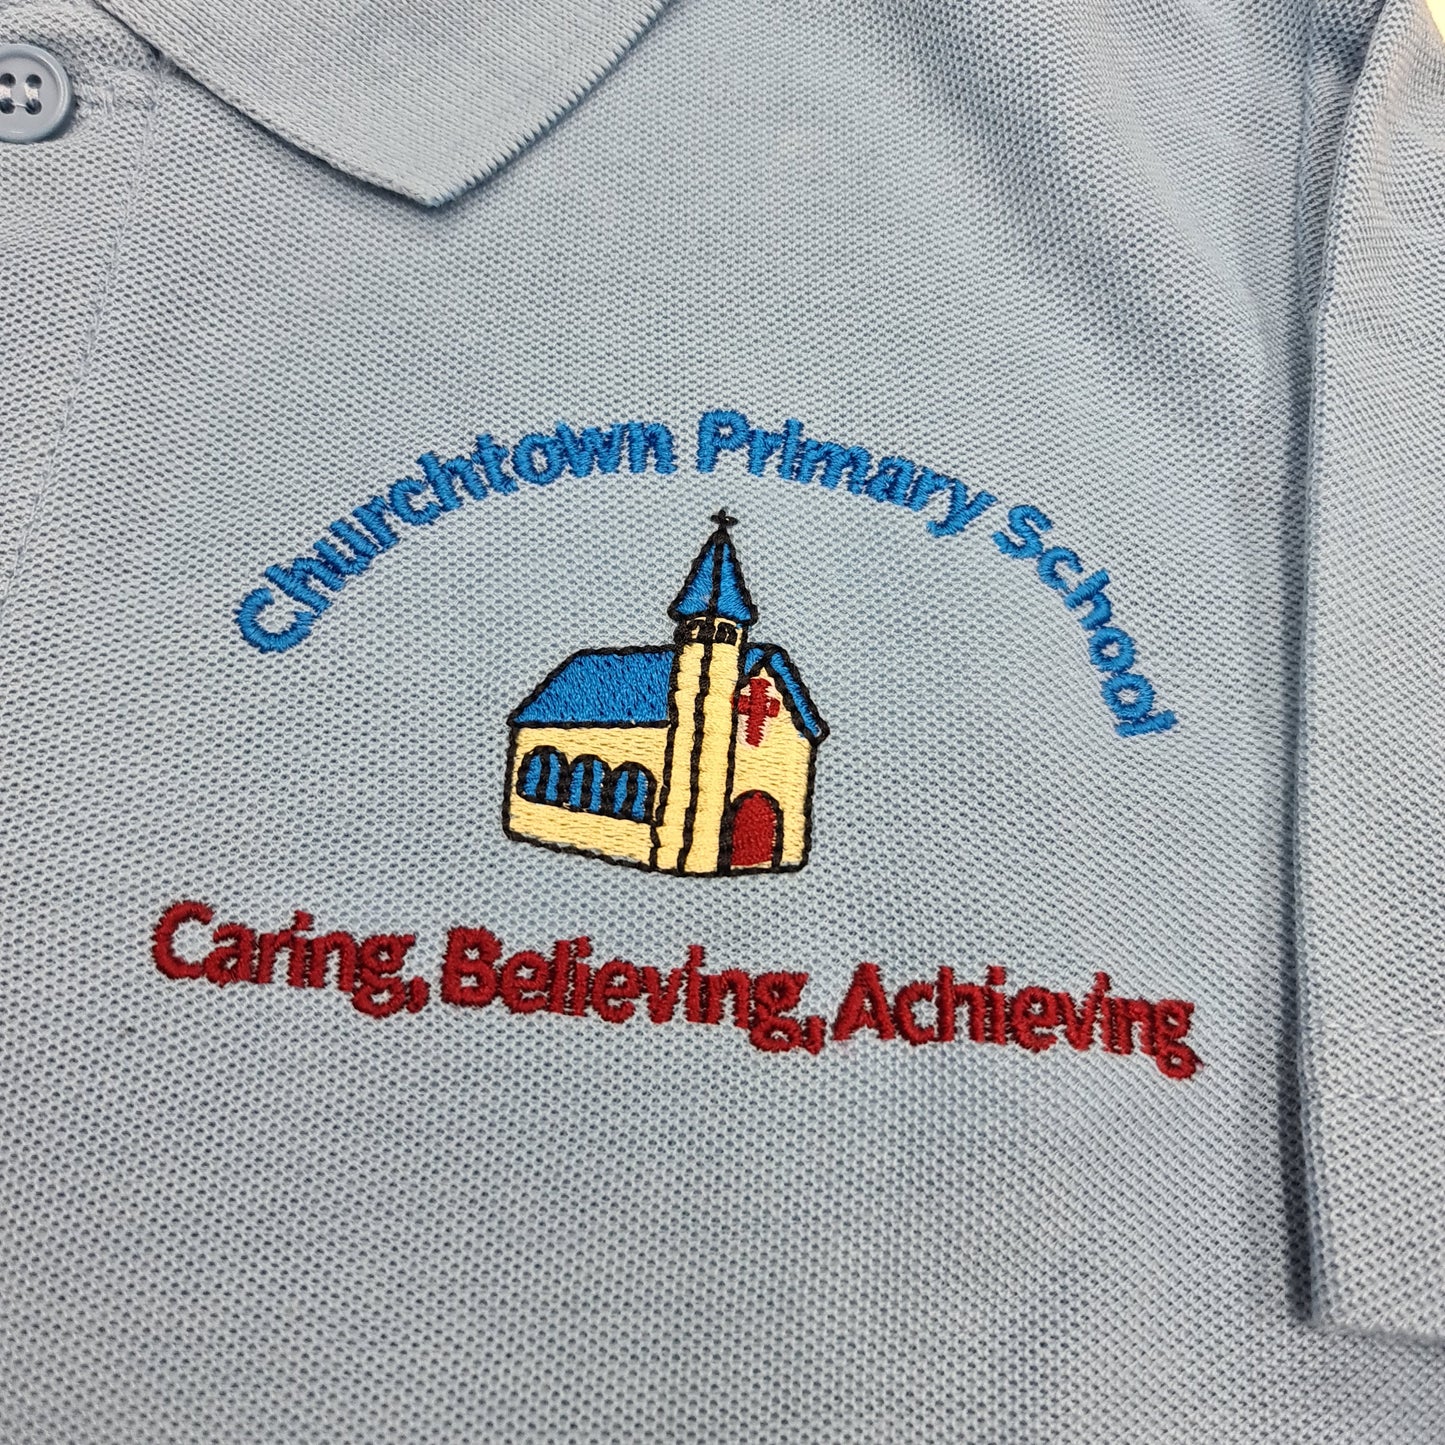 Churchtown Primary Polo Shirt